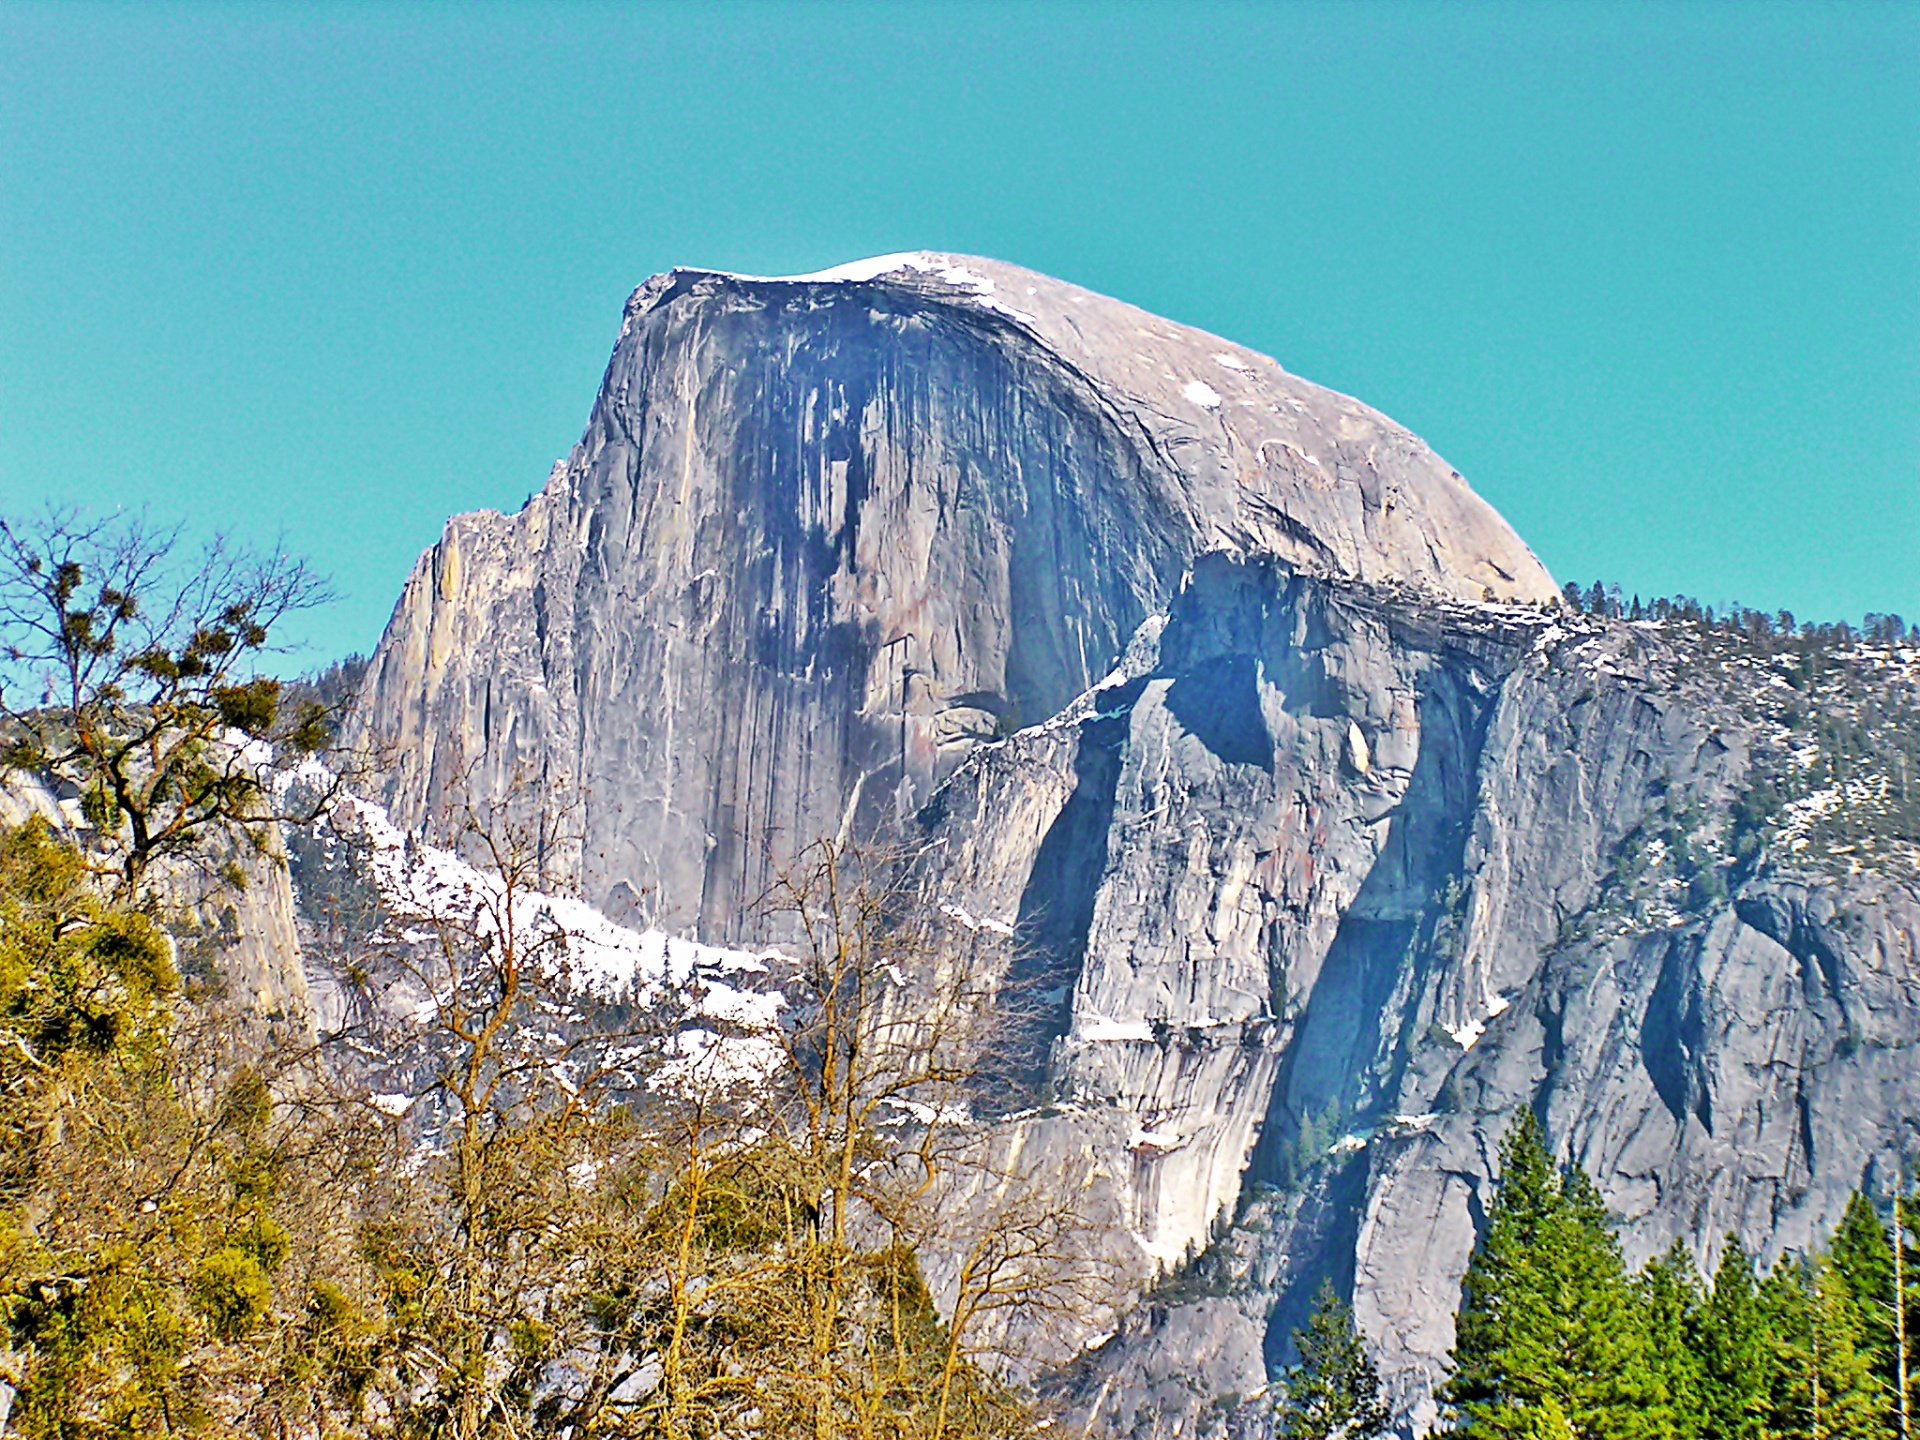 The famous El Capitan mountain on Yosemite National Park, California, United States of America